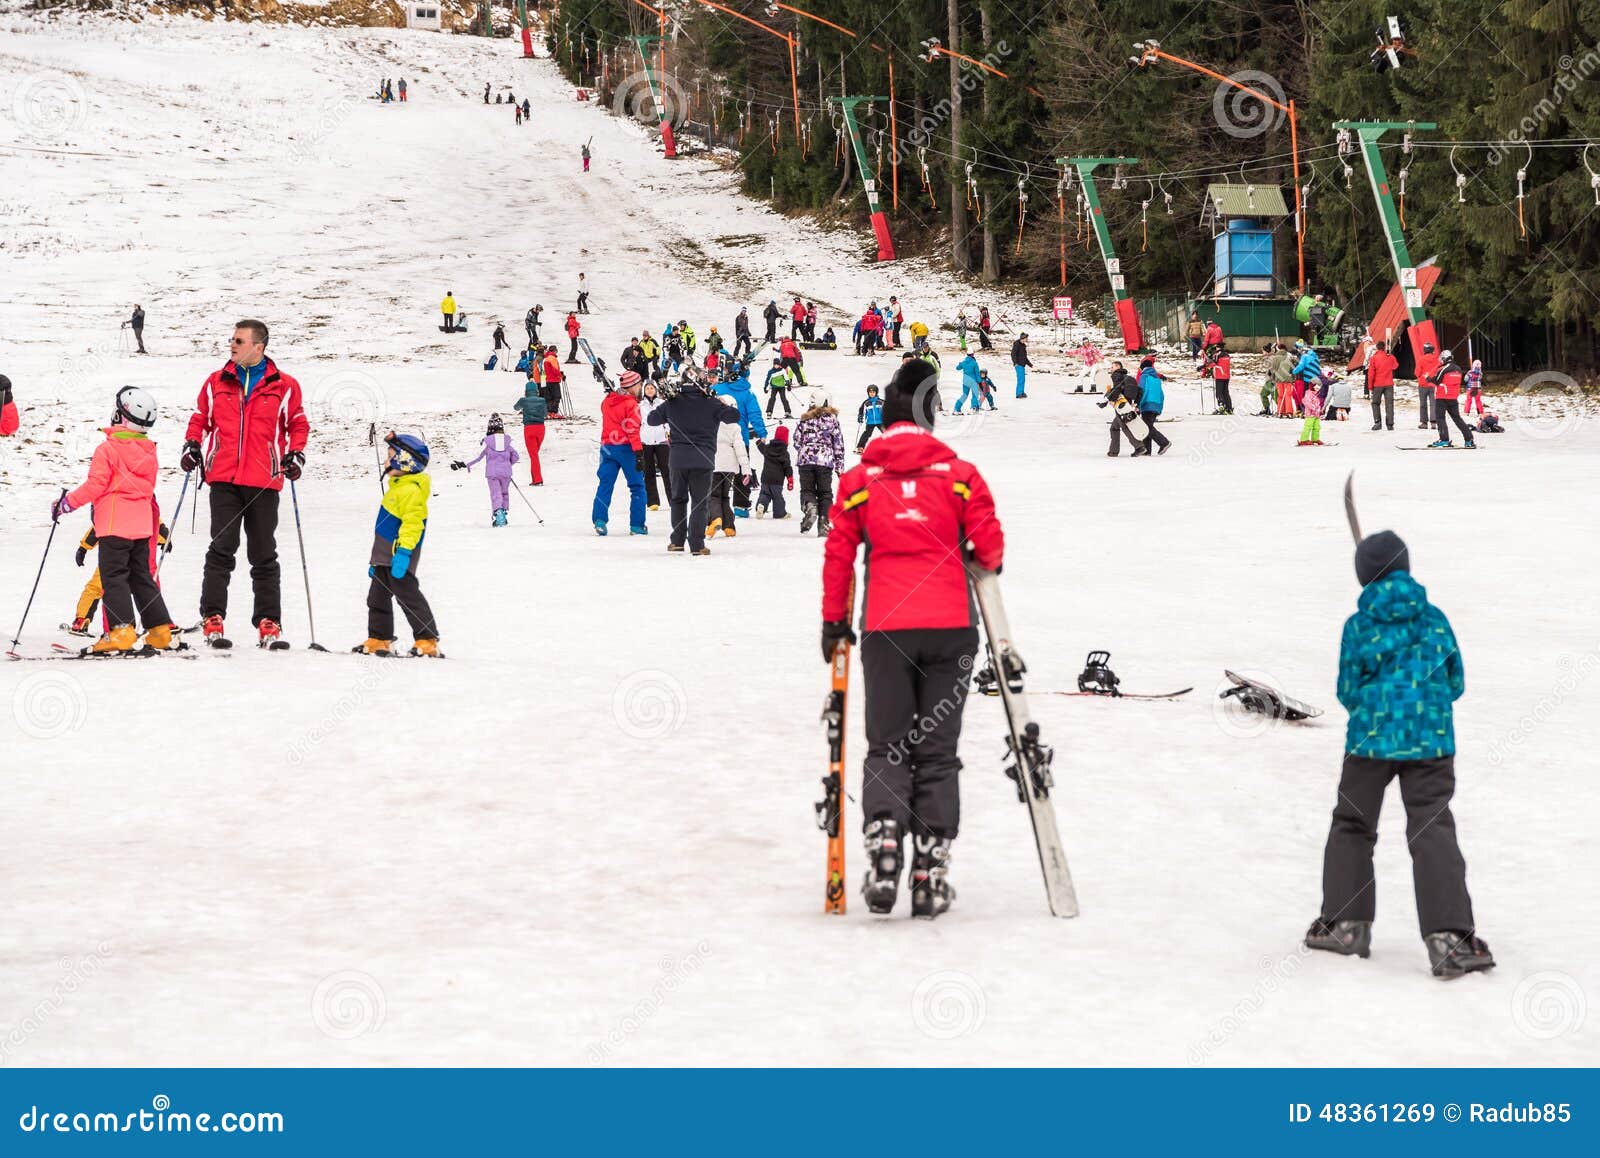 People Having Fun On Snowy Mountain Sky Resort Editorial Stock Image